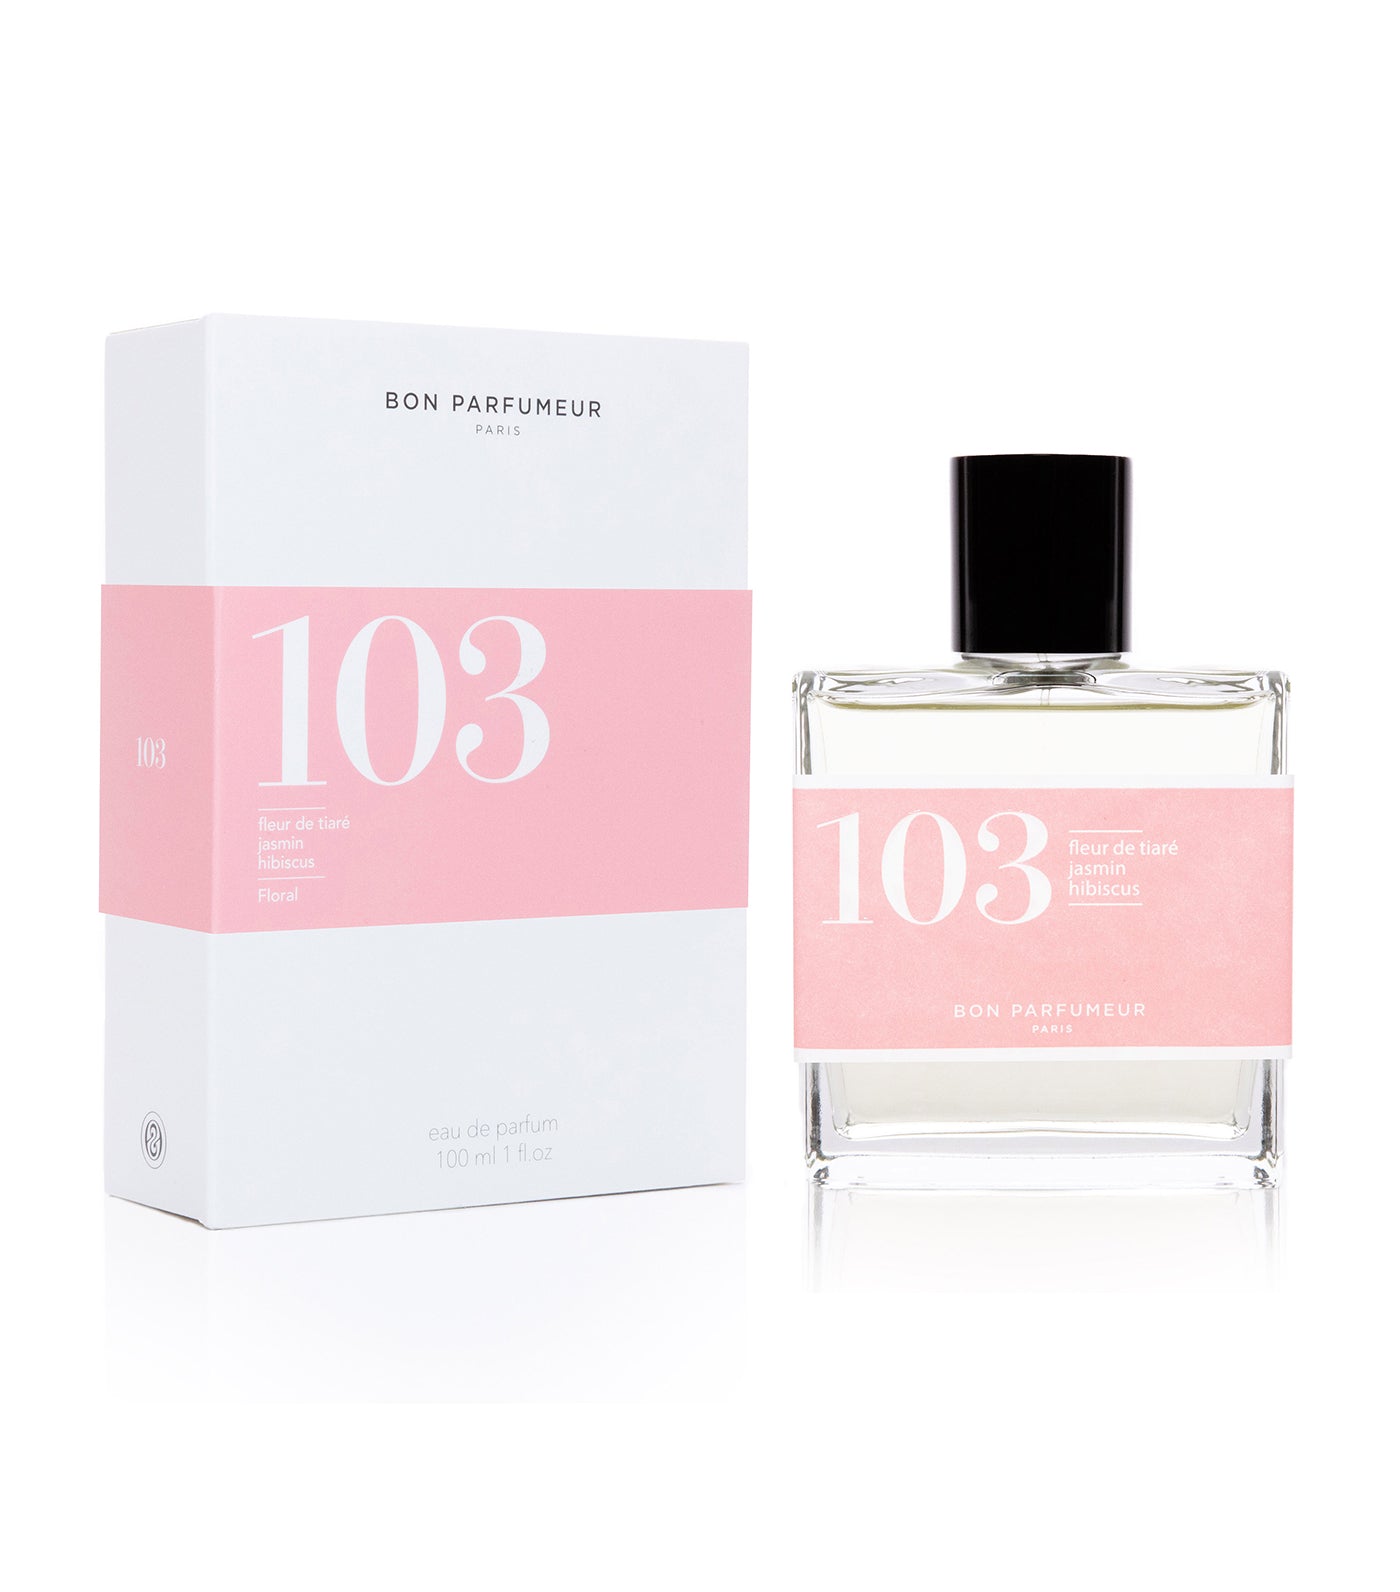 Eau de parfum 103 : tiare flower, jasmine and hibiscus